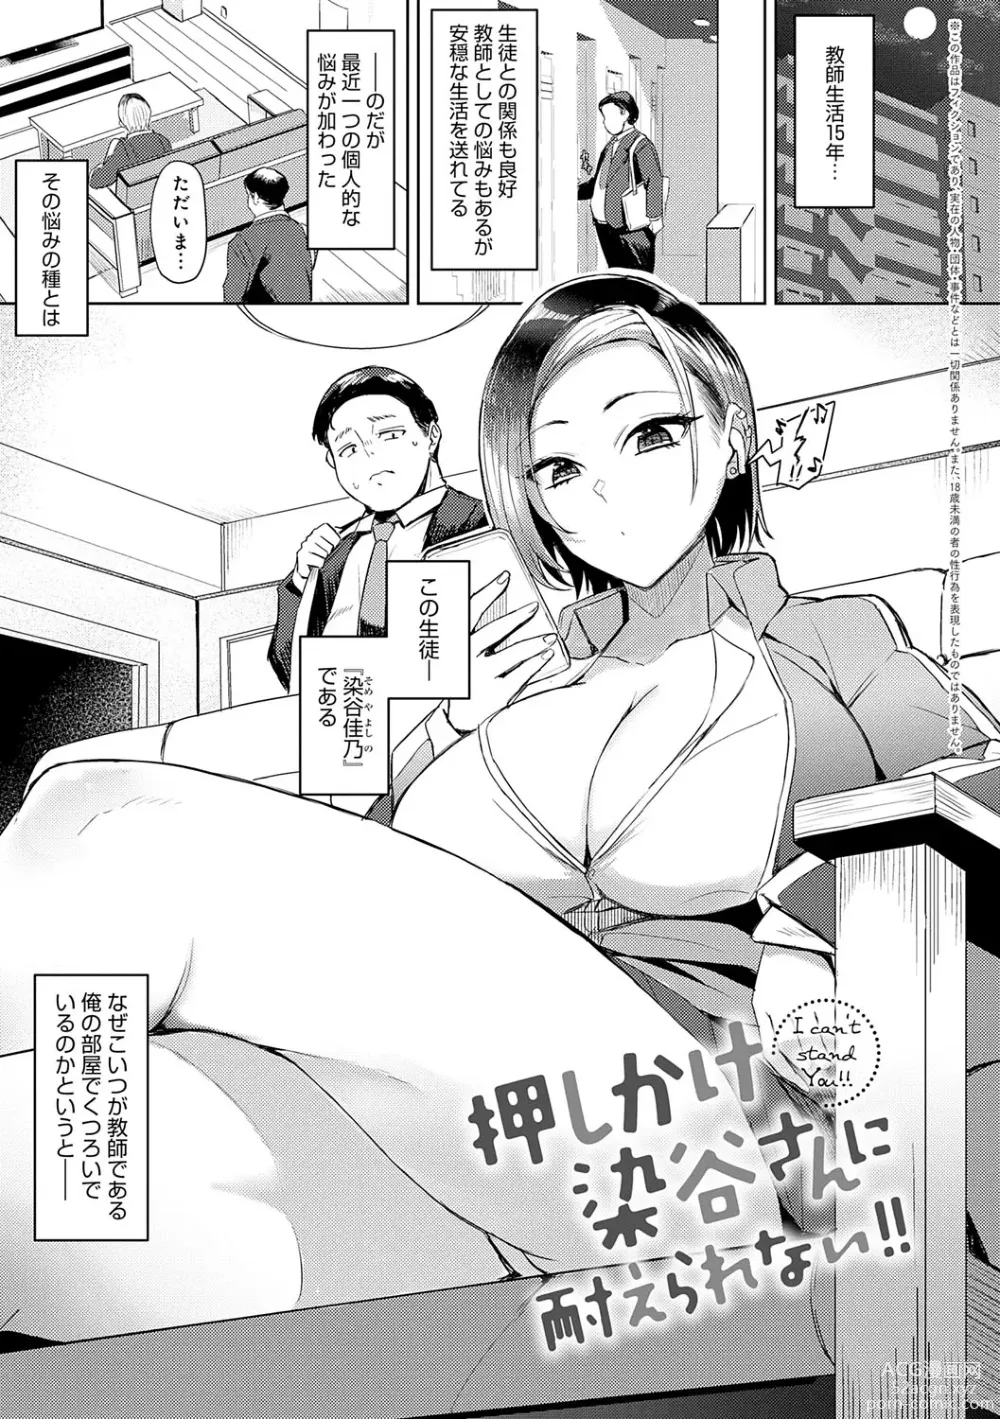 Page 4 of manga Hamerare x Hamaru